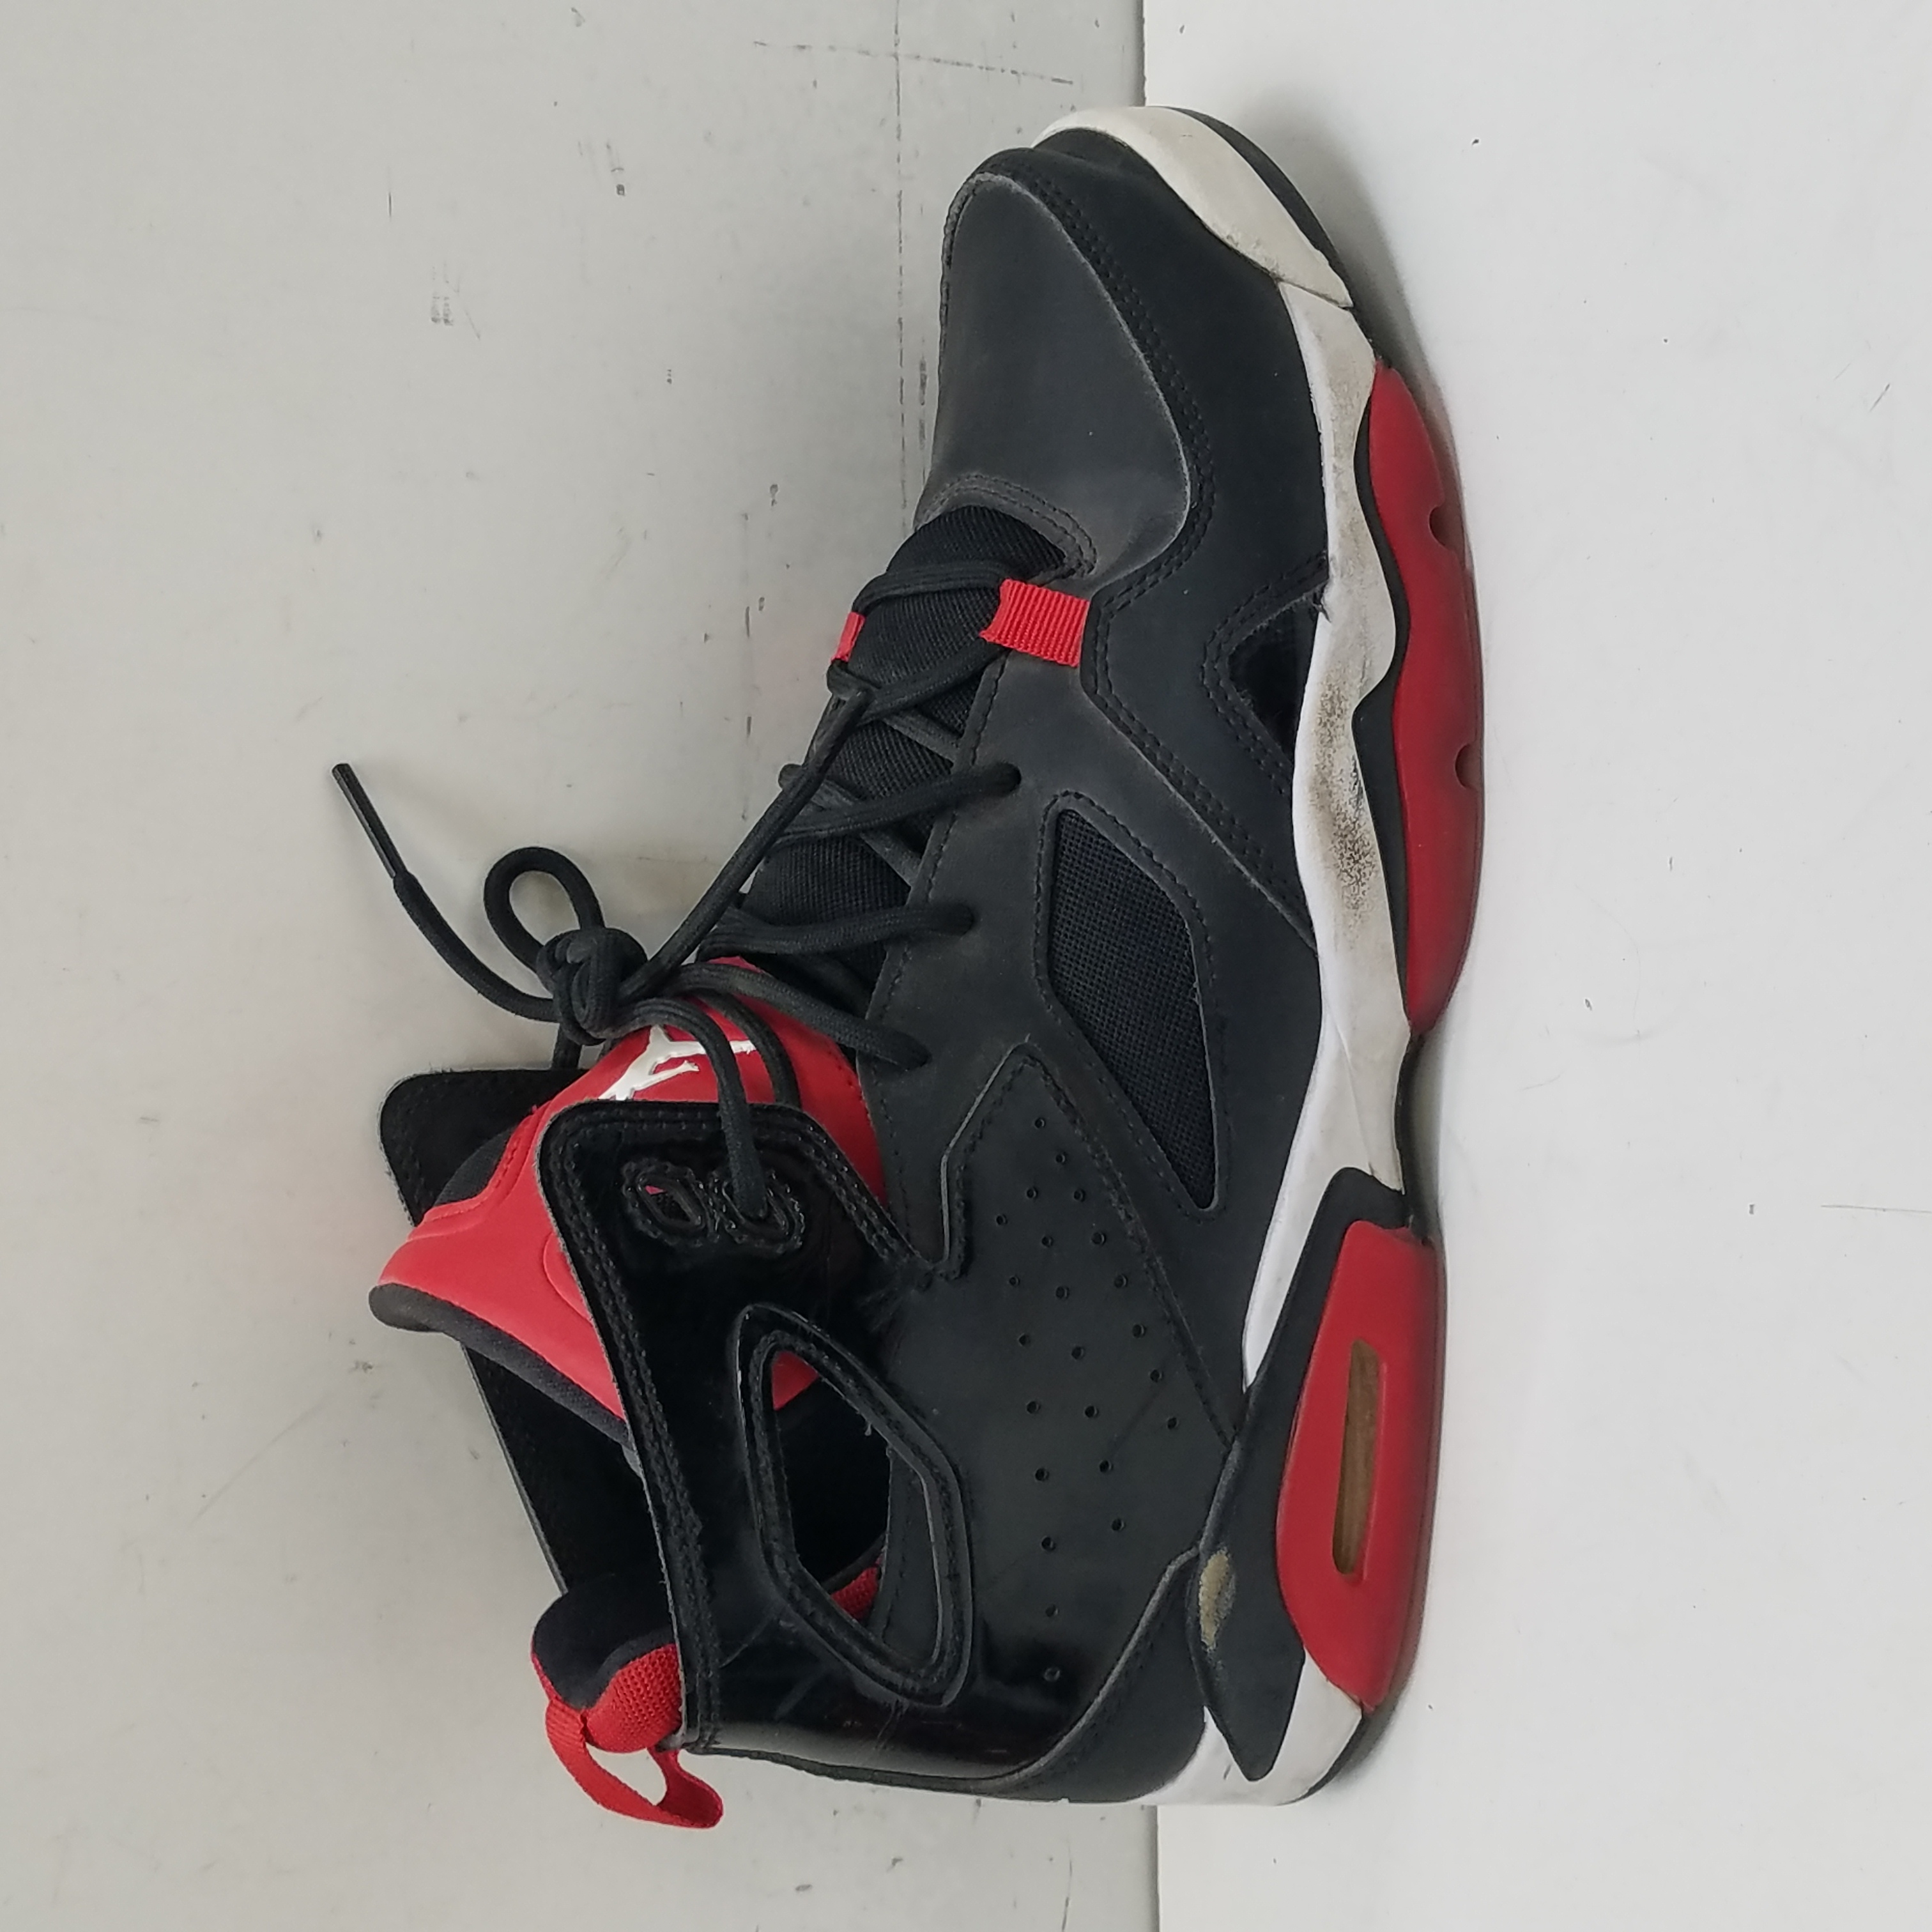 Buy the Nike Air Jordan Flight Club 91 Bred Sneakers Black, Red, White ...